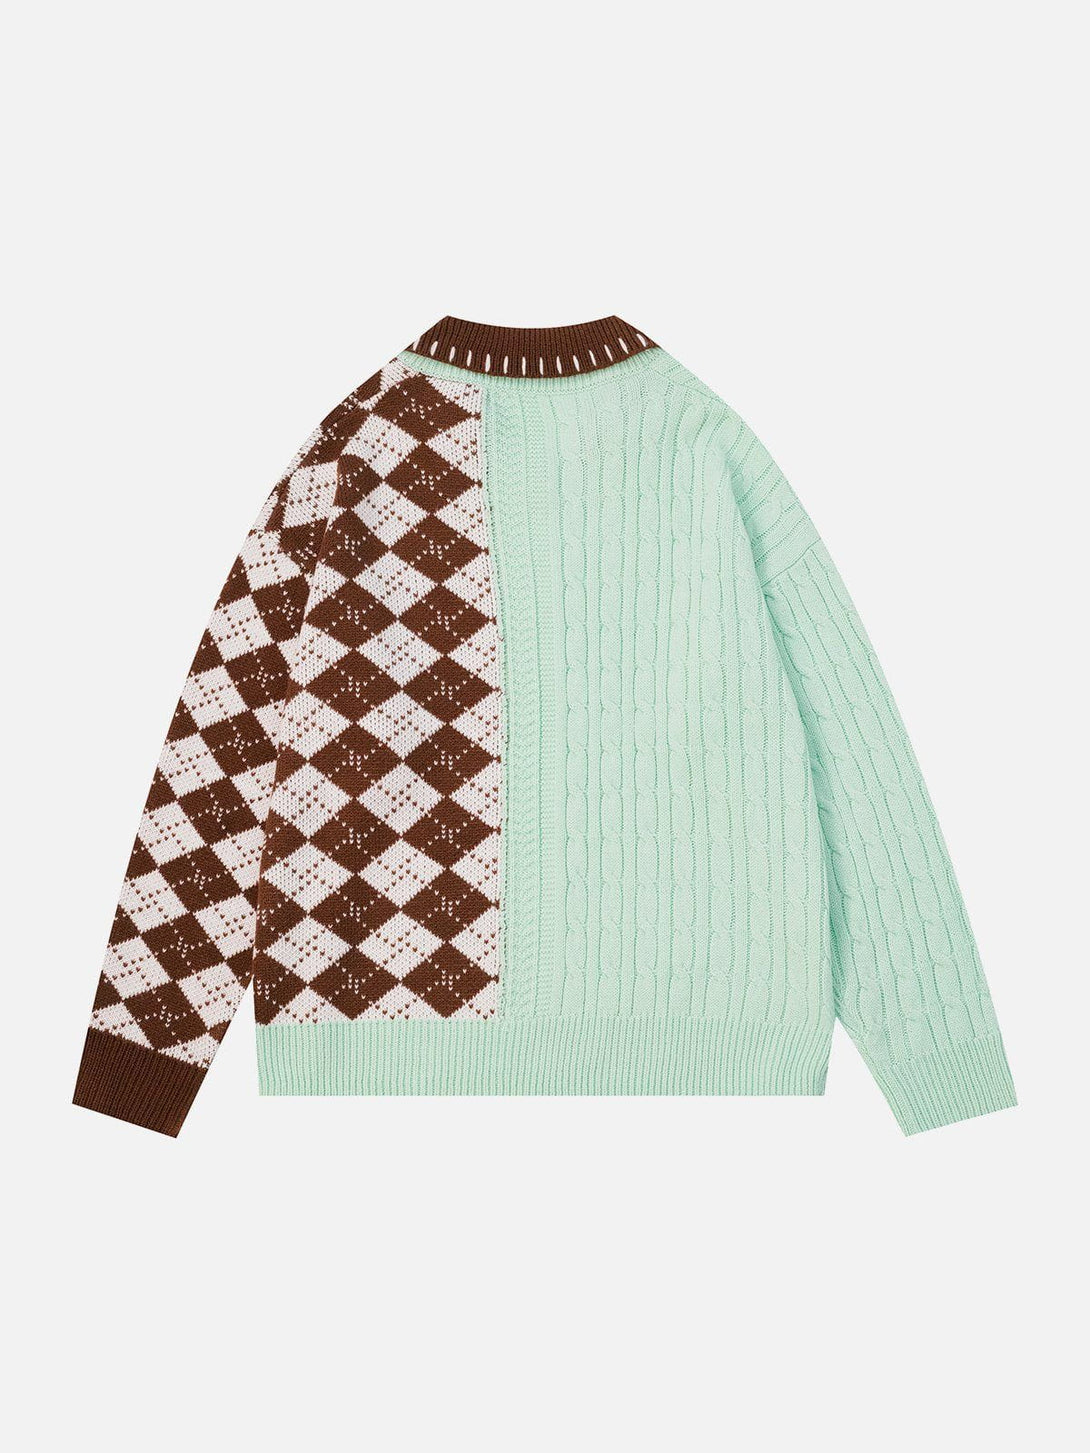 Majesda® - PLAID Polo Collar Sweater outfit ideas streetwear fashion